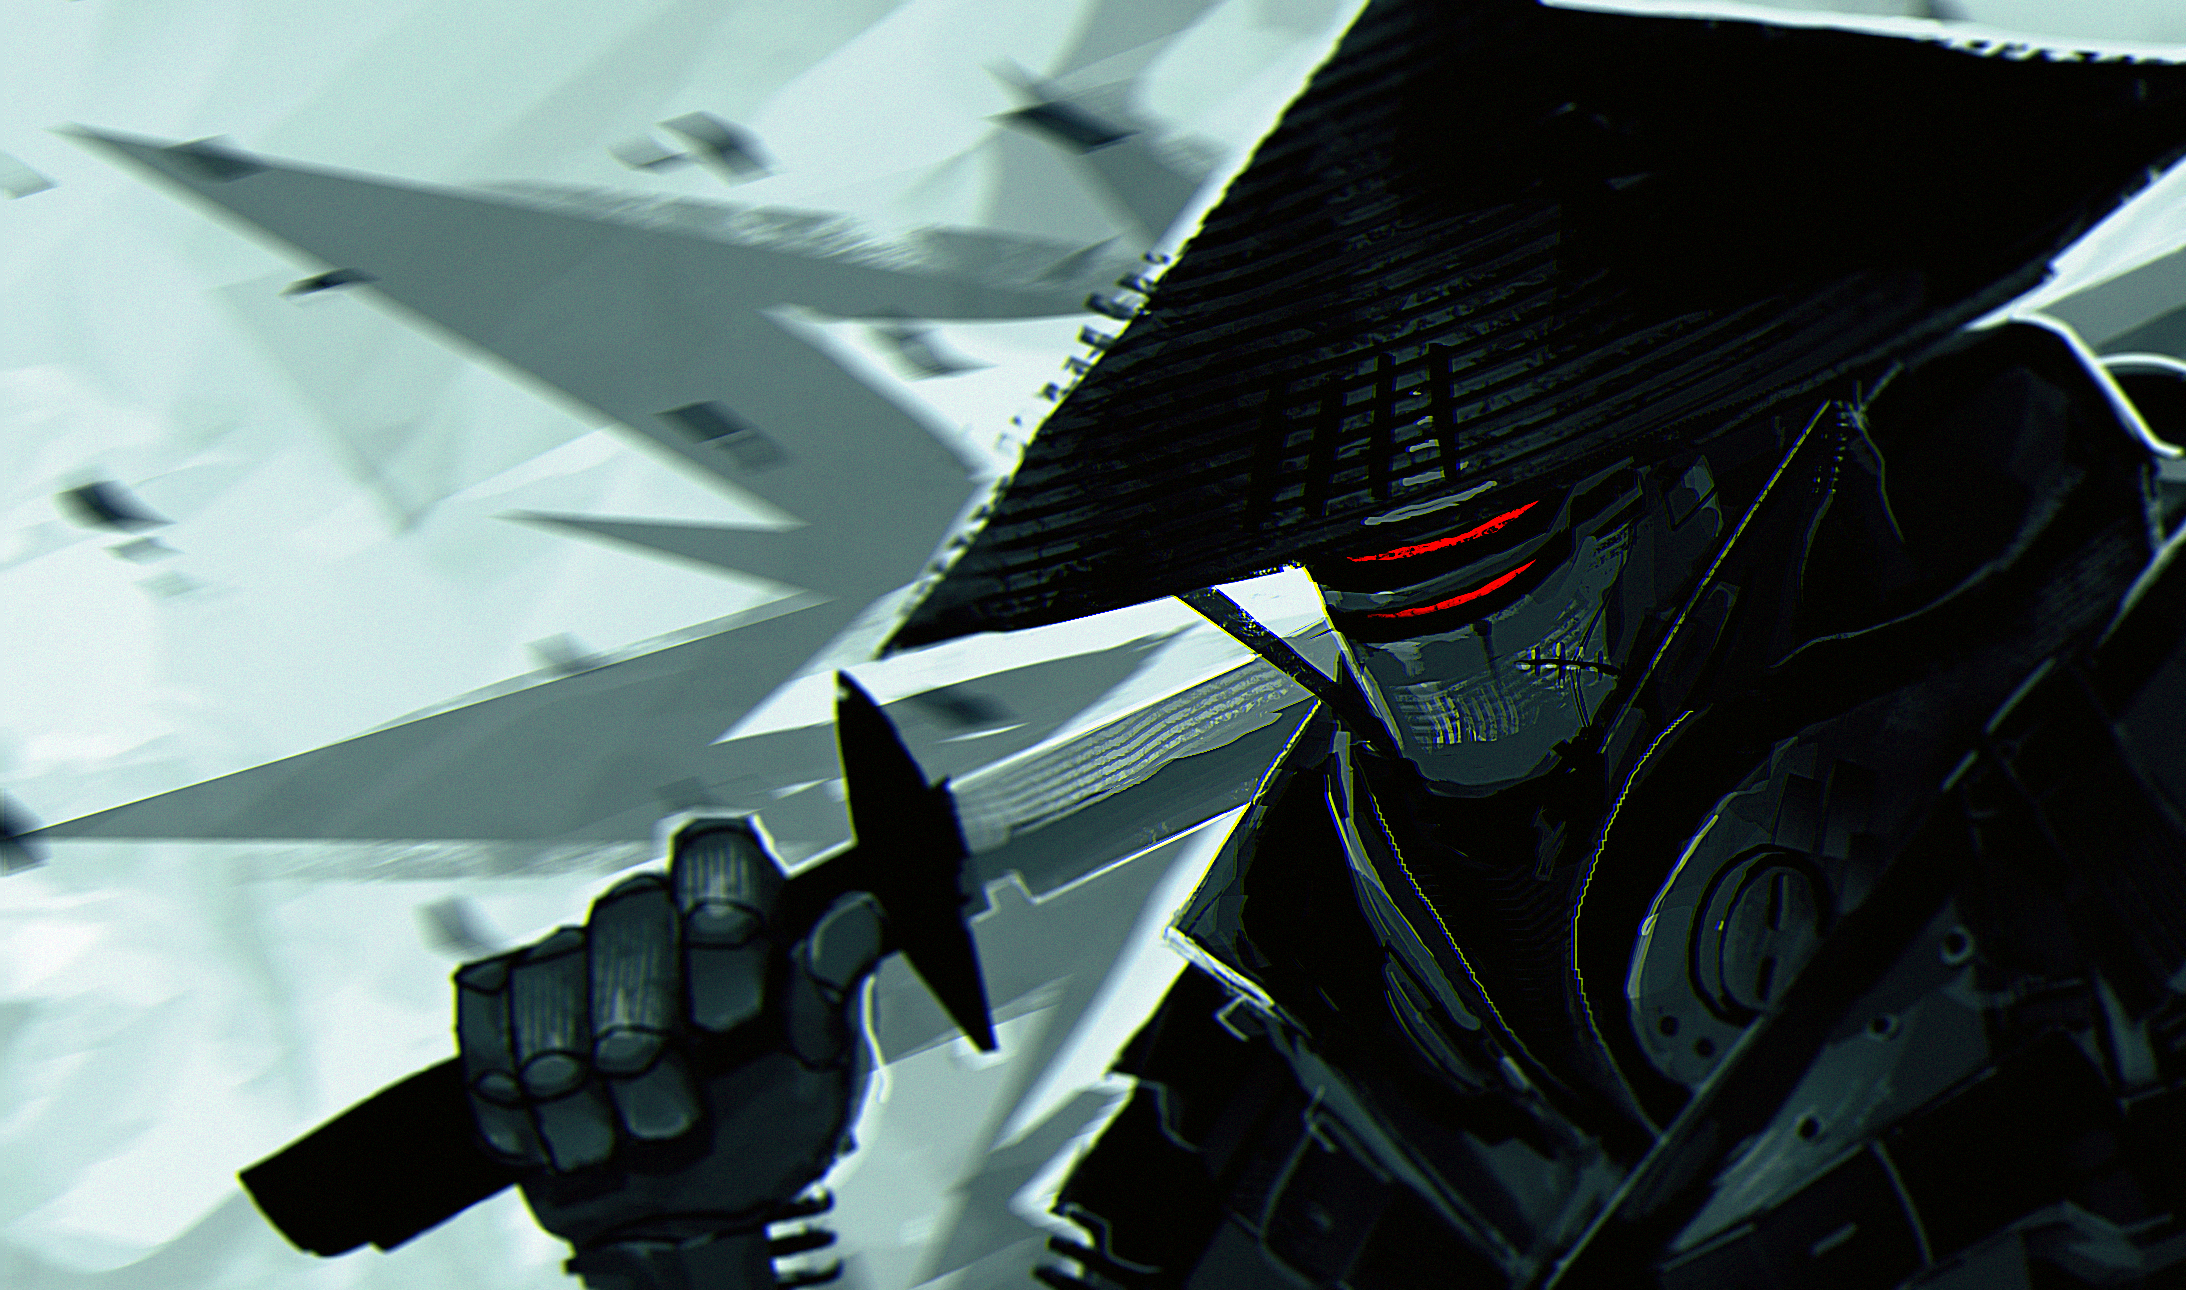 Картинка: Самурай, маска, головной убор, меч, кибер